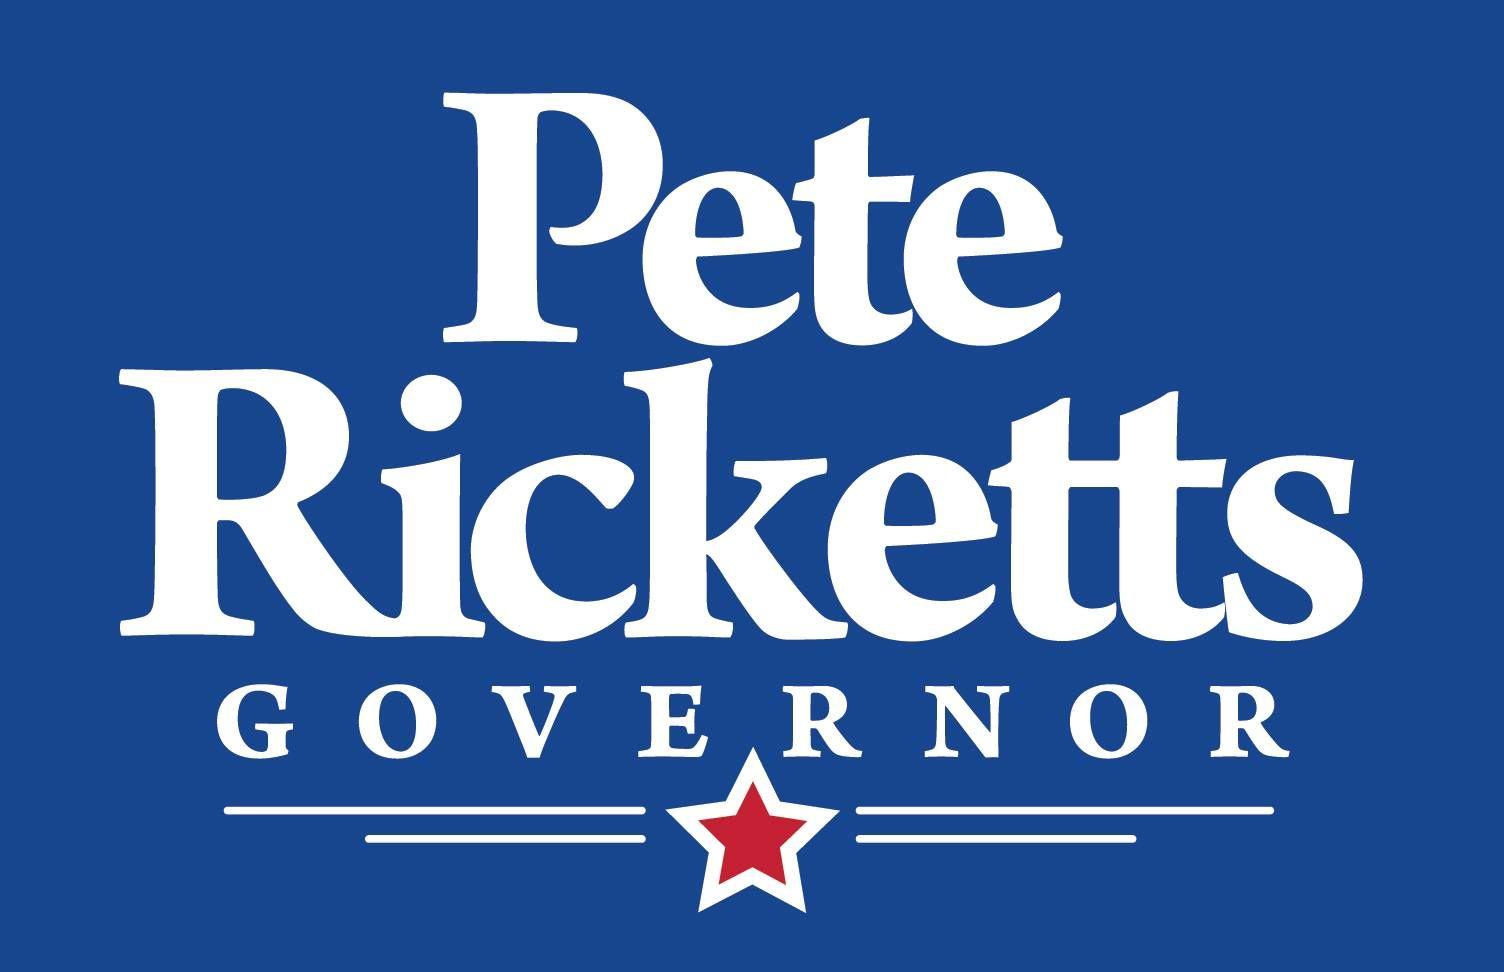 Governor Logo - File:Pete Ricketts governor logo.jpg - Wikimedia Commons